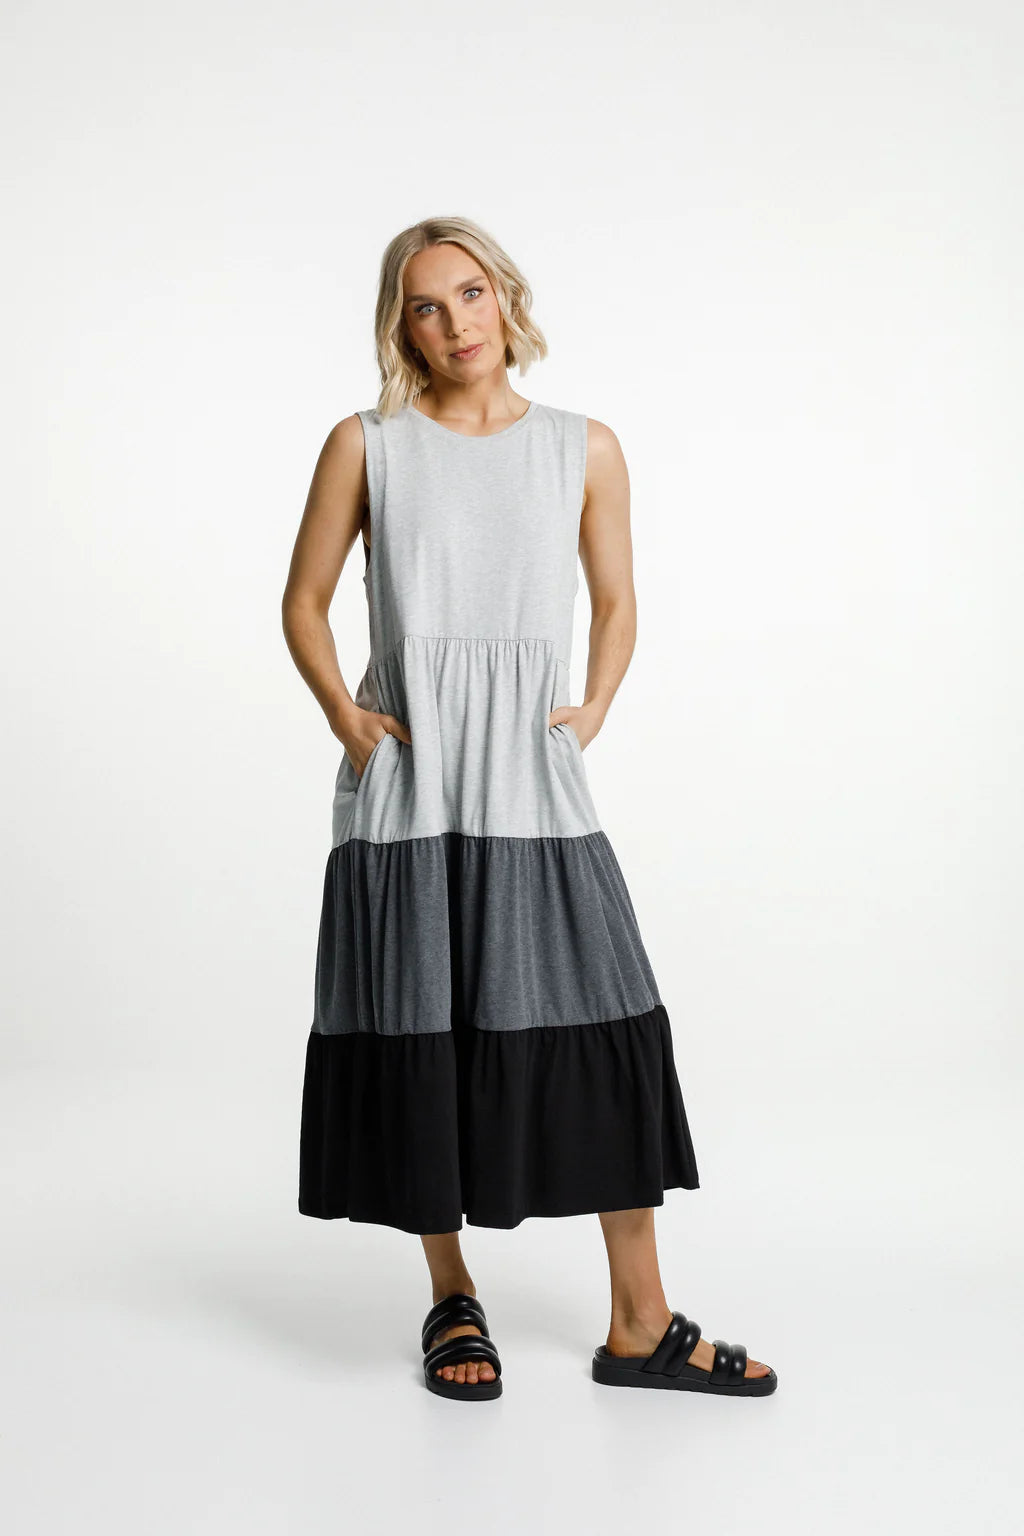 Home-lee Kendall Singlet Dress - Grey/Charcoal/Black